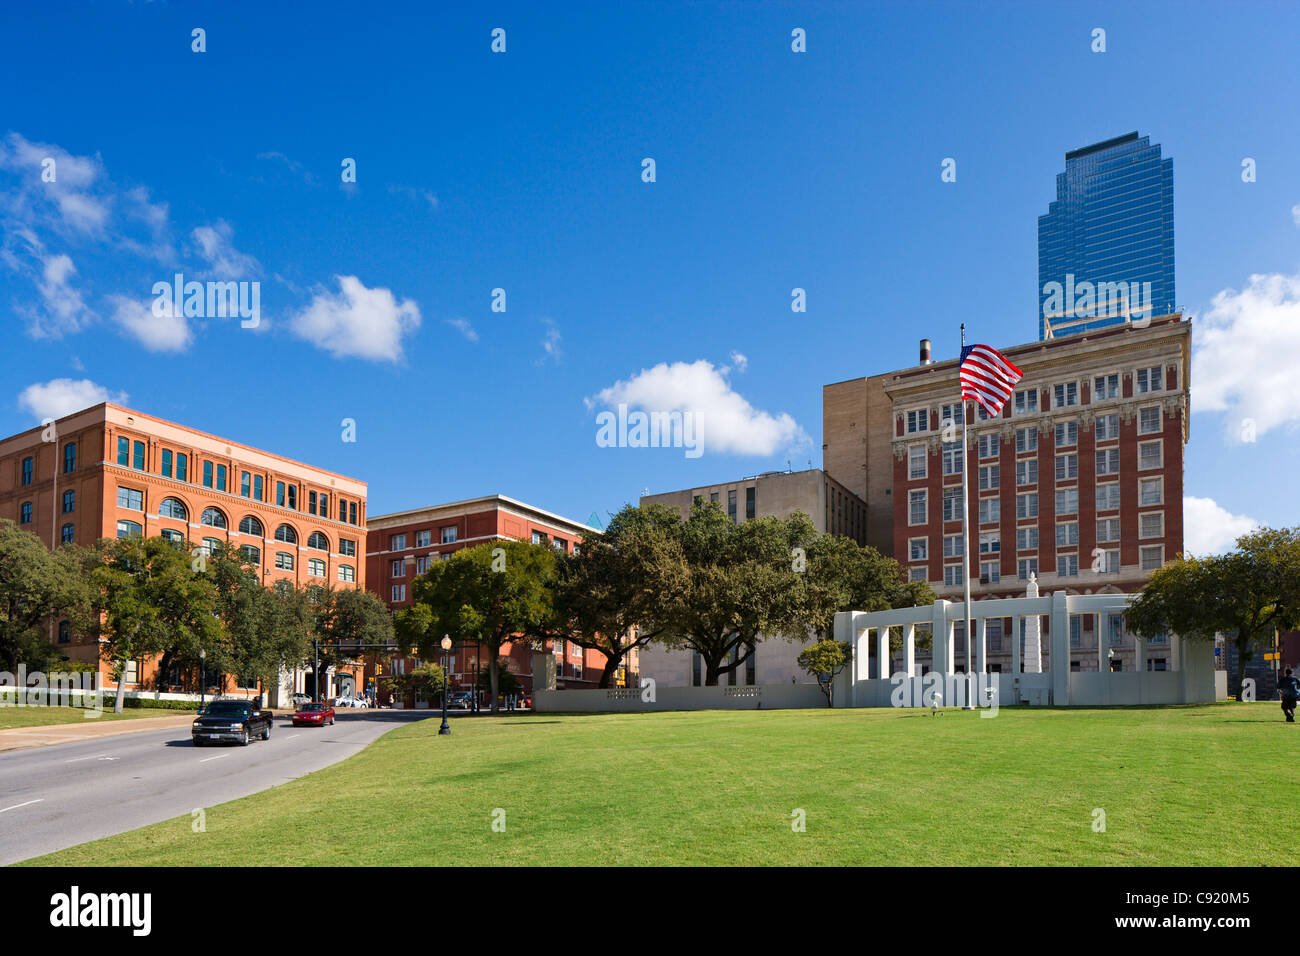 Site de l'assassinat de Kennedy en regardant vers Dealey Plaza avec l'ancien Texas Schoolbook Depository à gauche, Dallas, Texas, USA. Banque D'Images